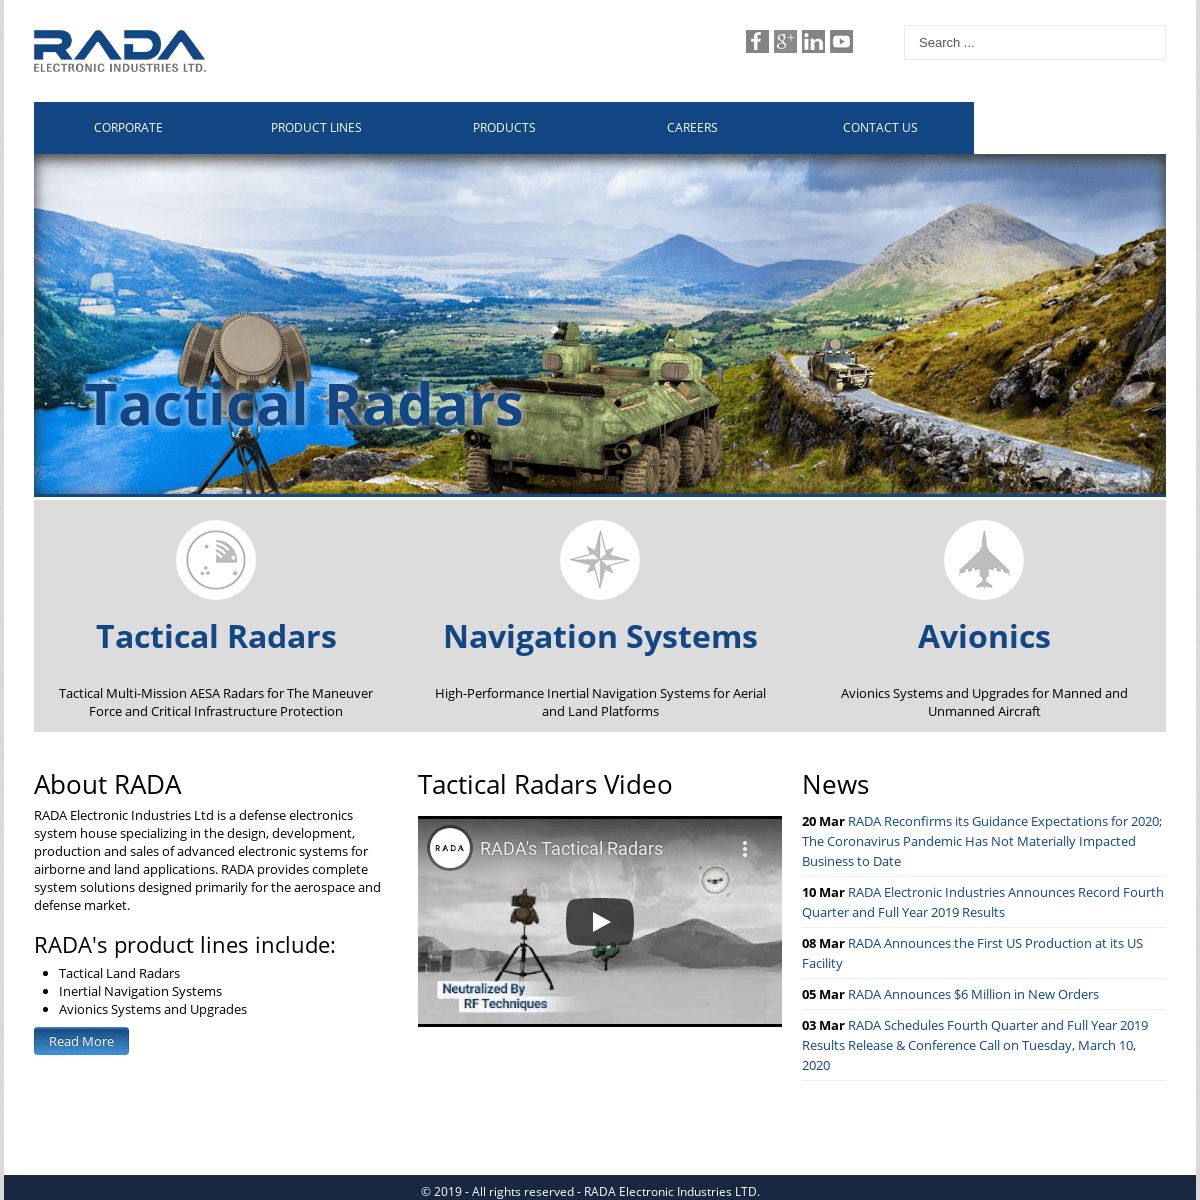 A complete backup of rada.com